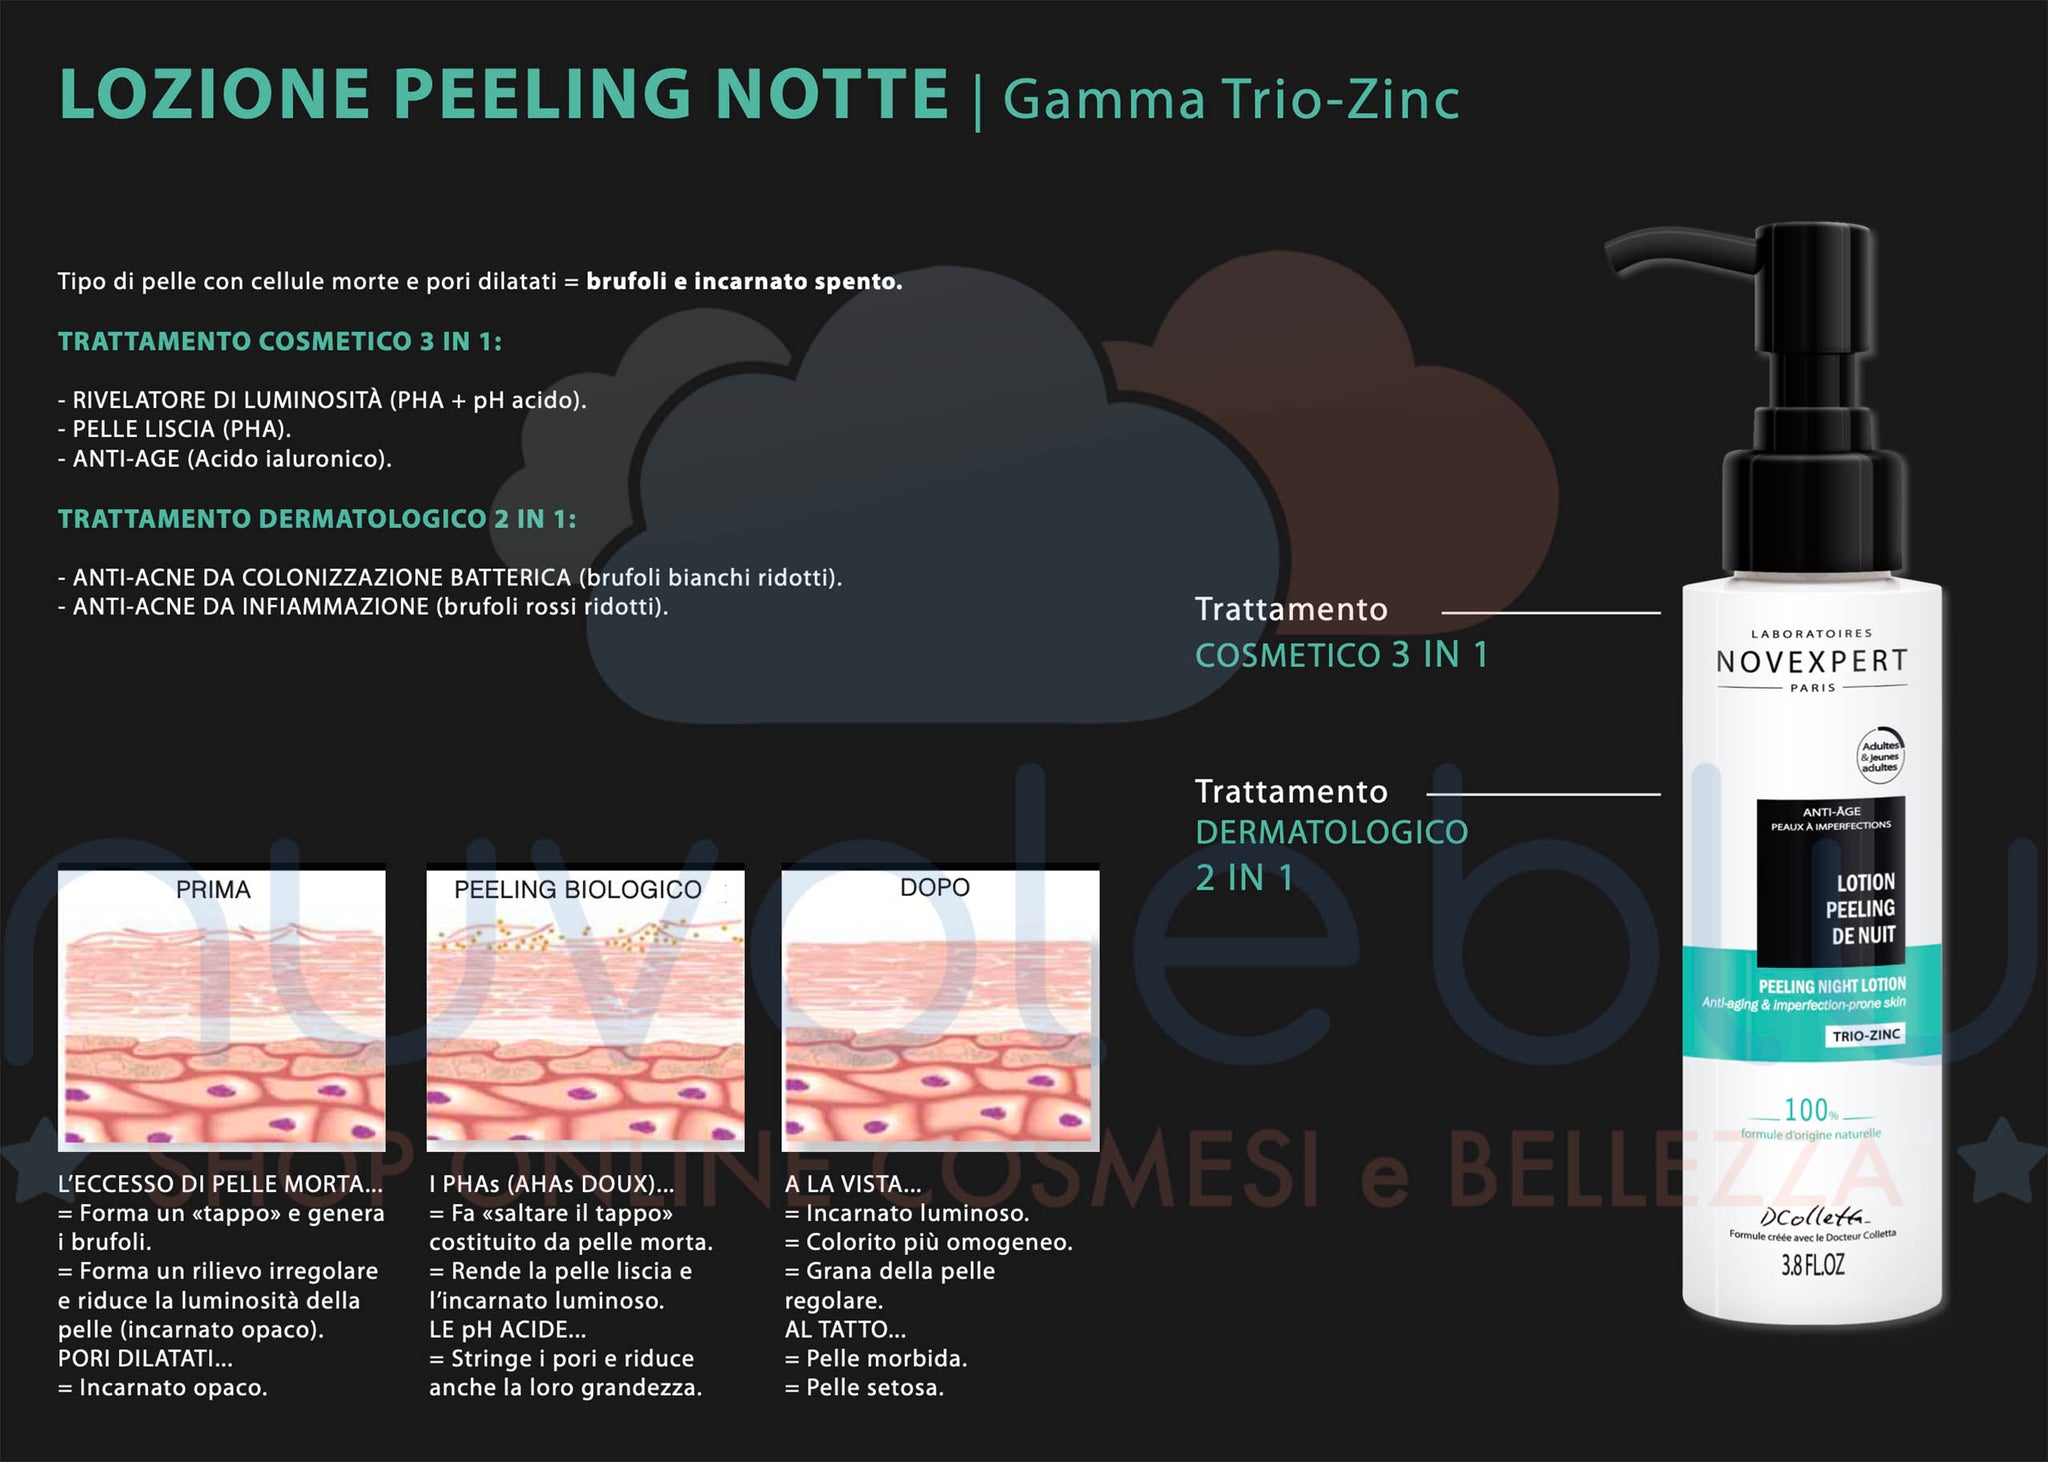 Trio-Zinc - Lozione Peeling Notte Novexpert